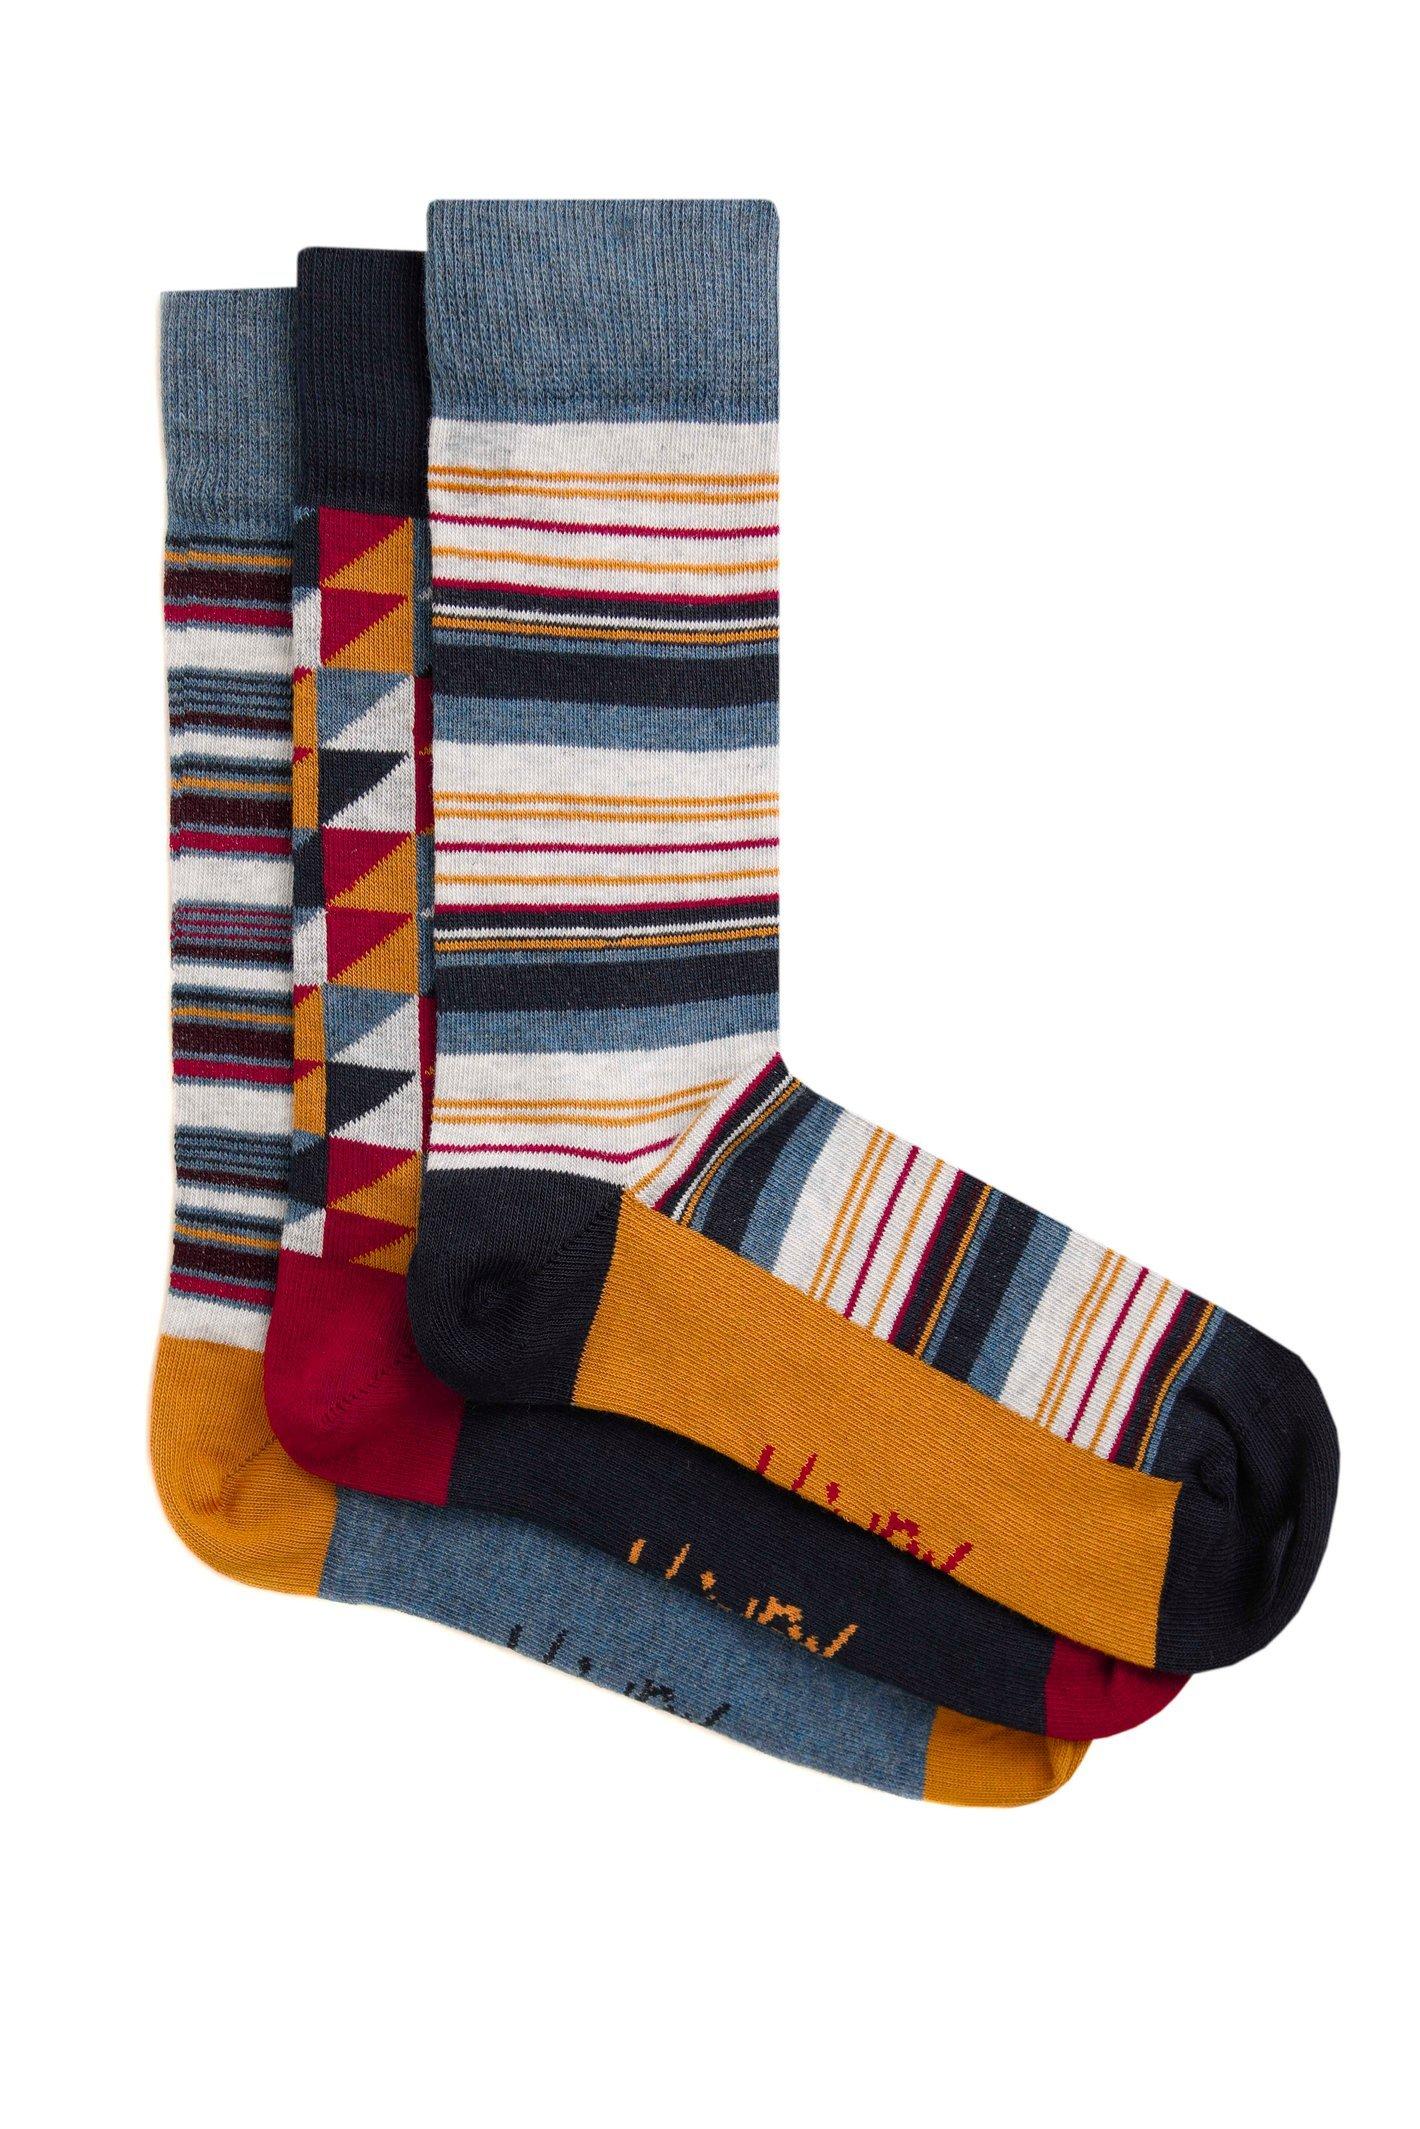 Wyatt Eco Stripe Socks Multi Pack